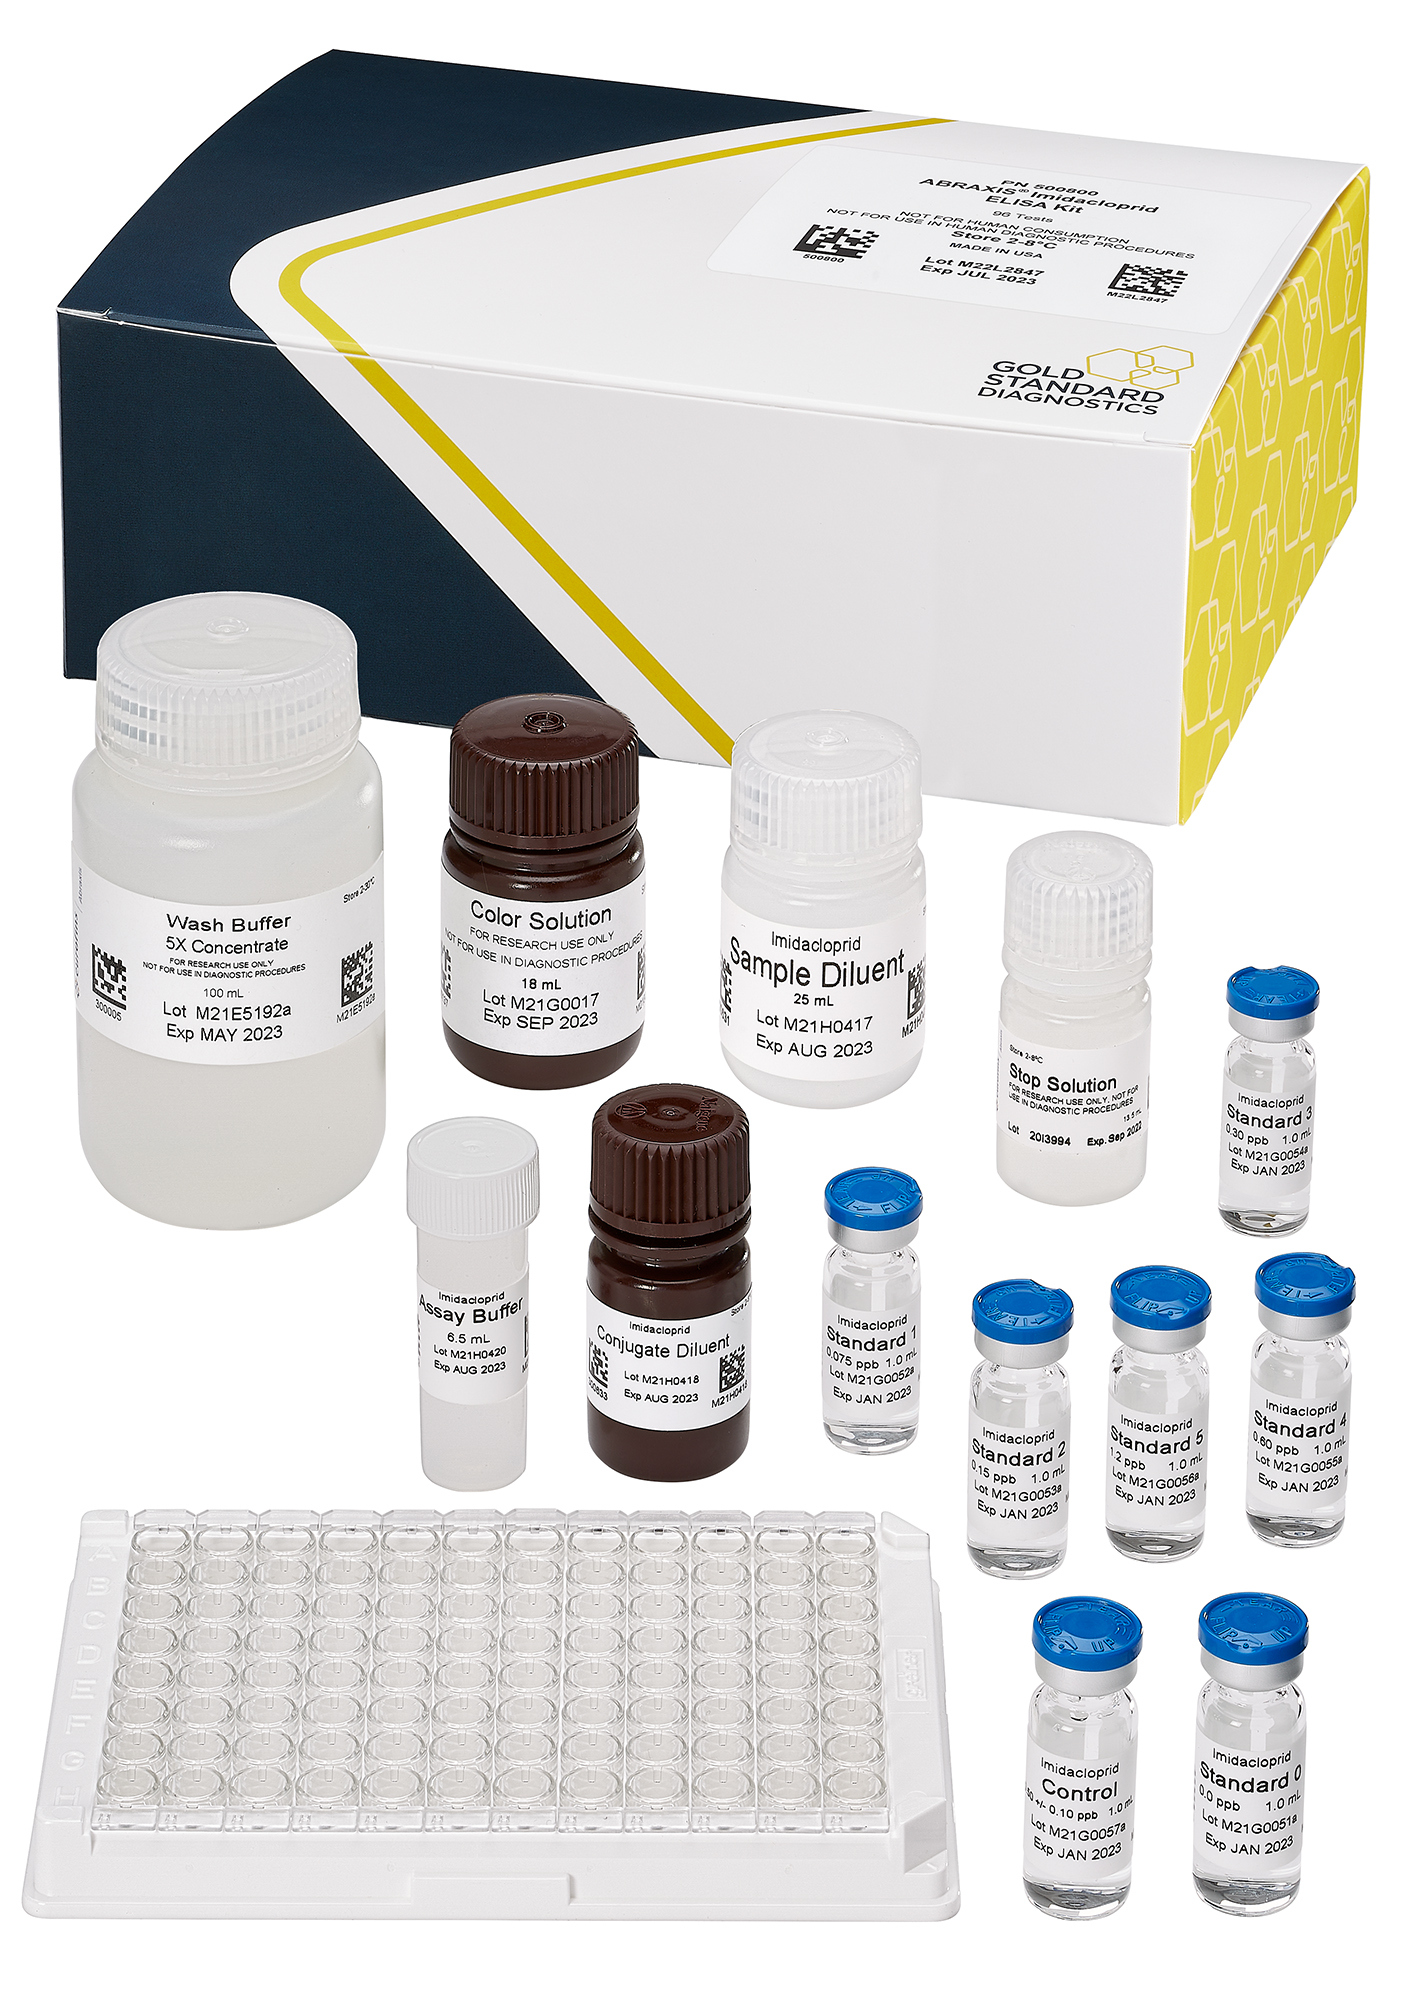 ABRAXIS® Imidacloprid/Clothianidin, ELISA, 96-test